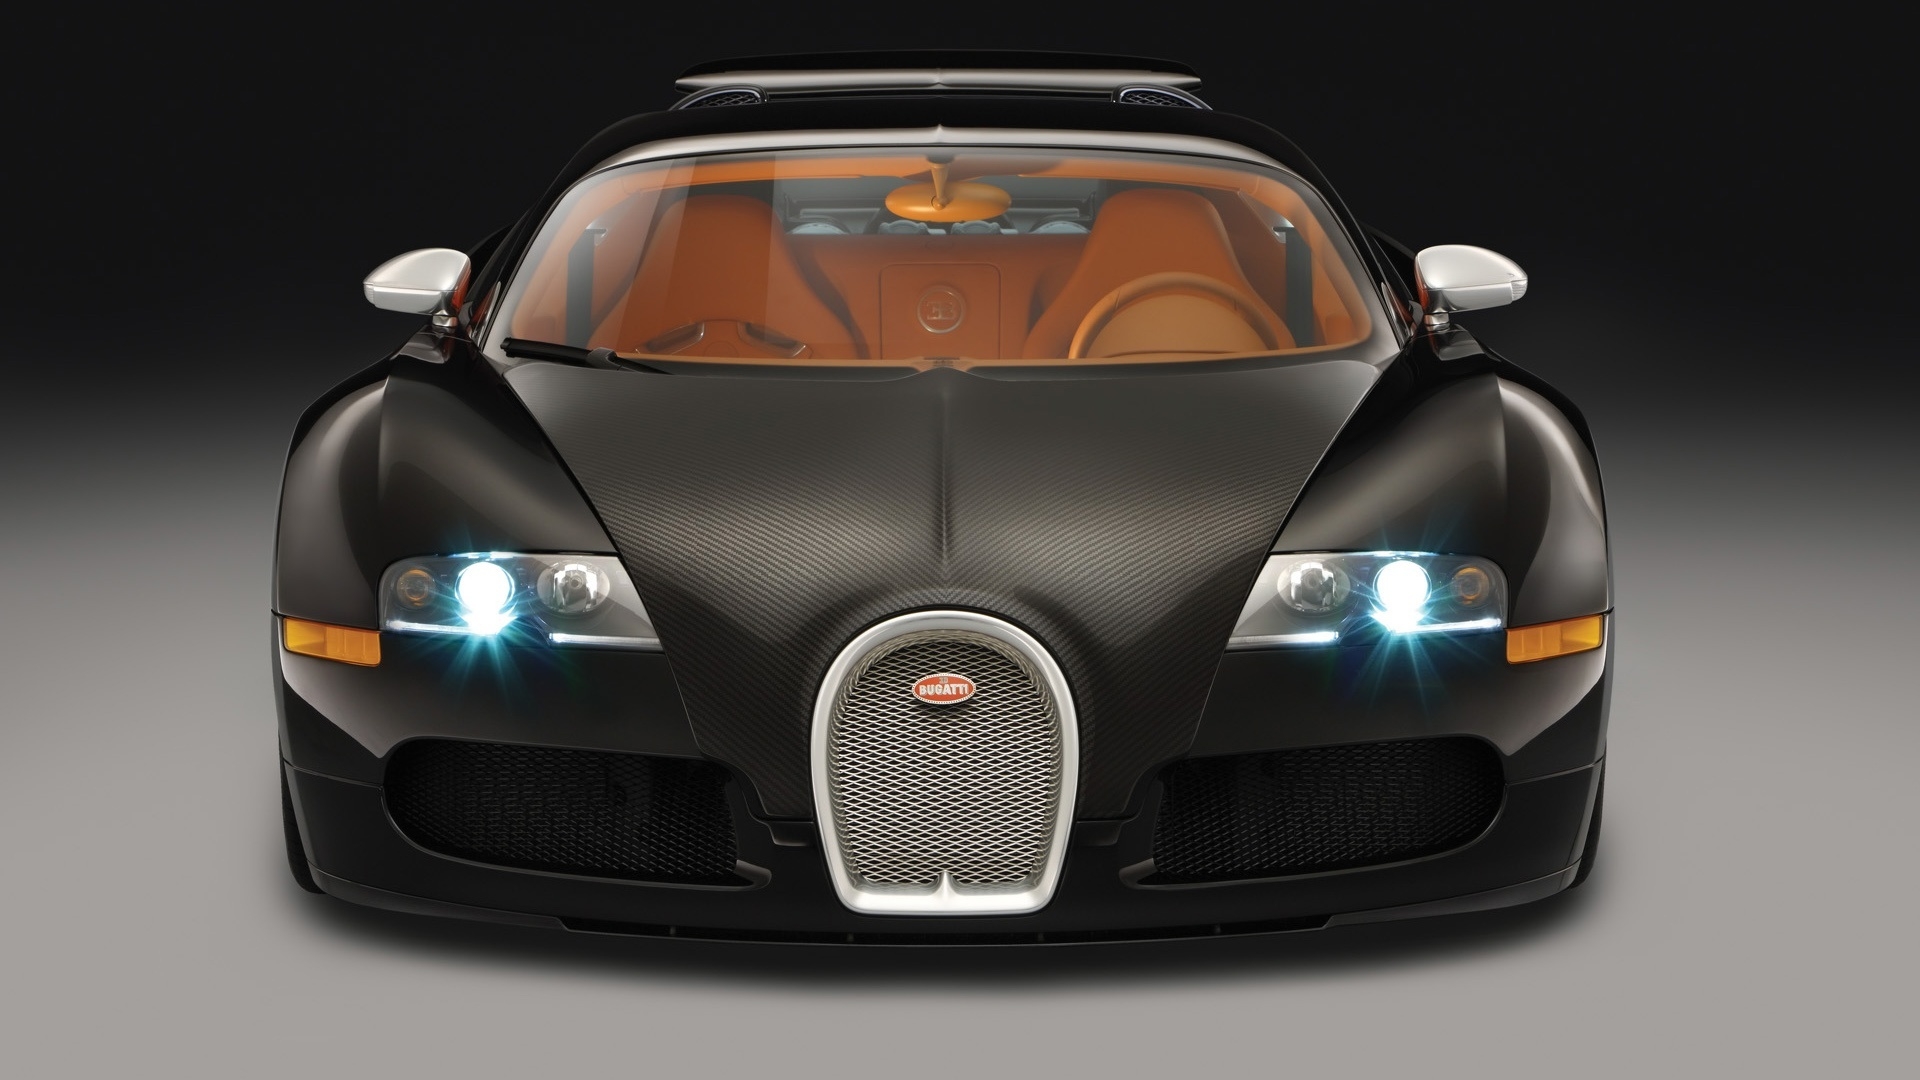 Bugatti Veyron Sang Noir 2008 - Front for 1920 x 1080 HDTV 1080p resolution